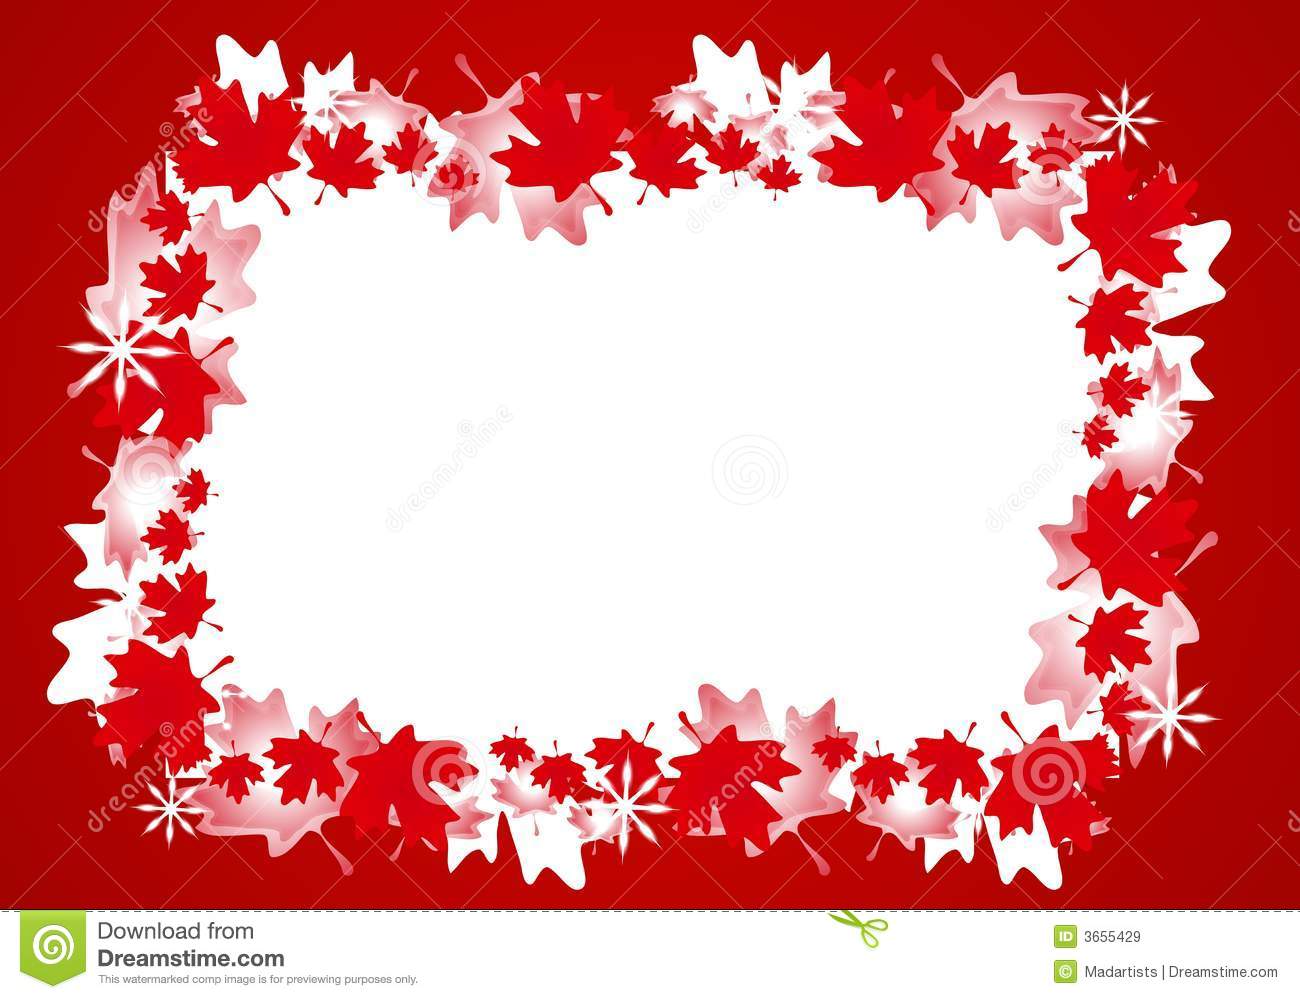 Canadian Maple Leaf Christmas Border Frame Royalty Free Stock Images